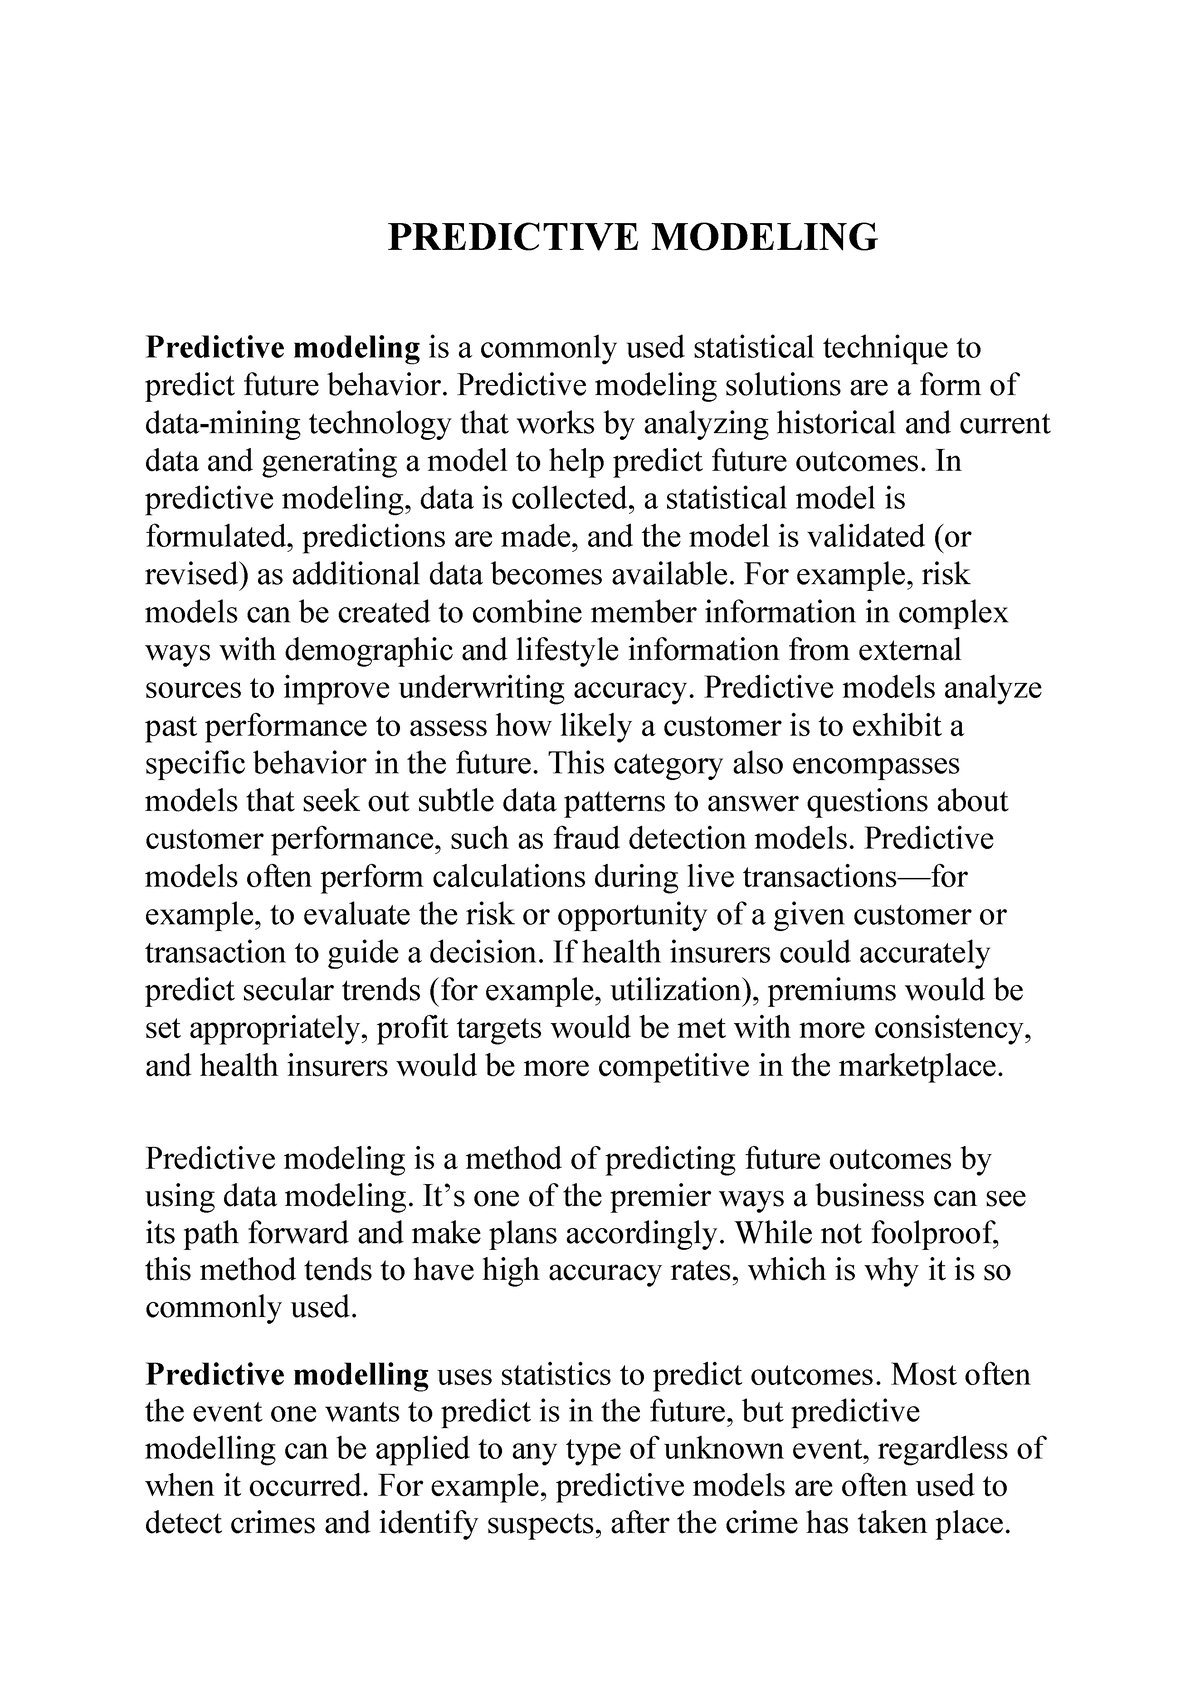 dissertation on predictive model